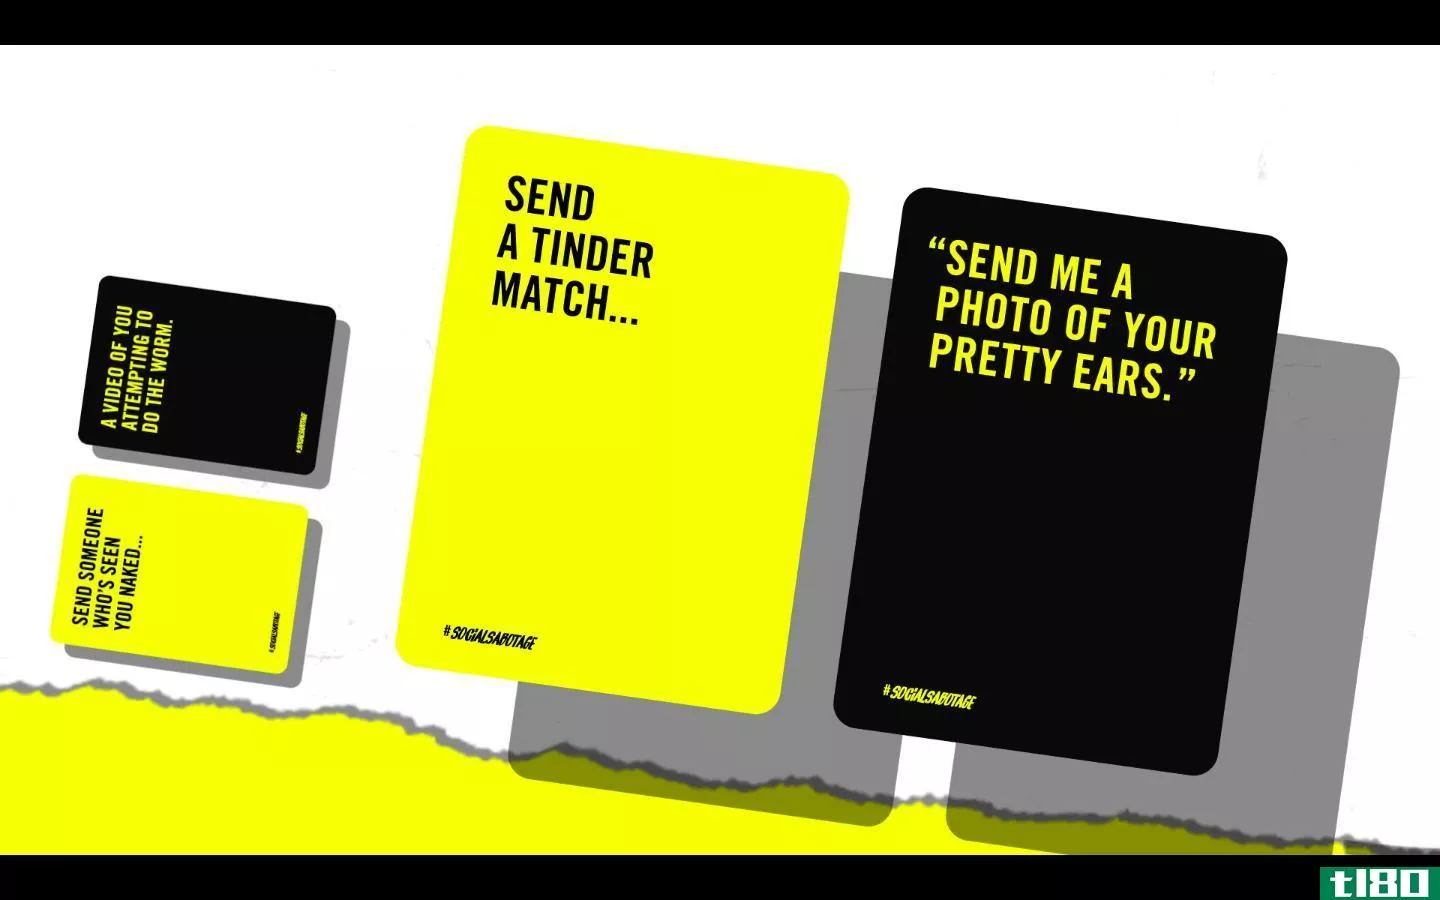 buzzfeed的新社交媒体卡片游戏是骚扰他人的一种简单方式